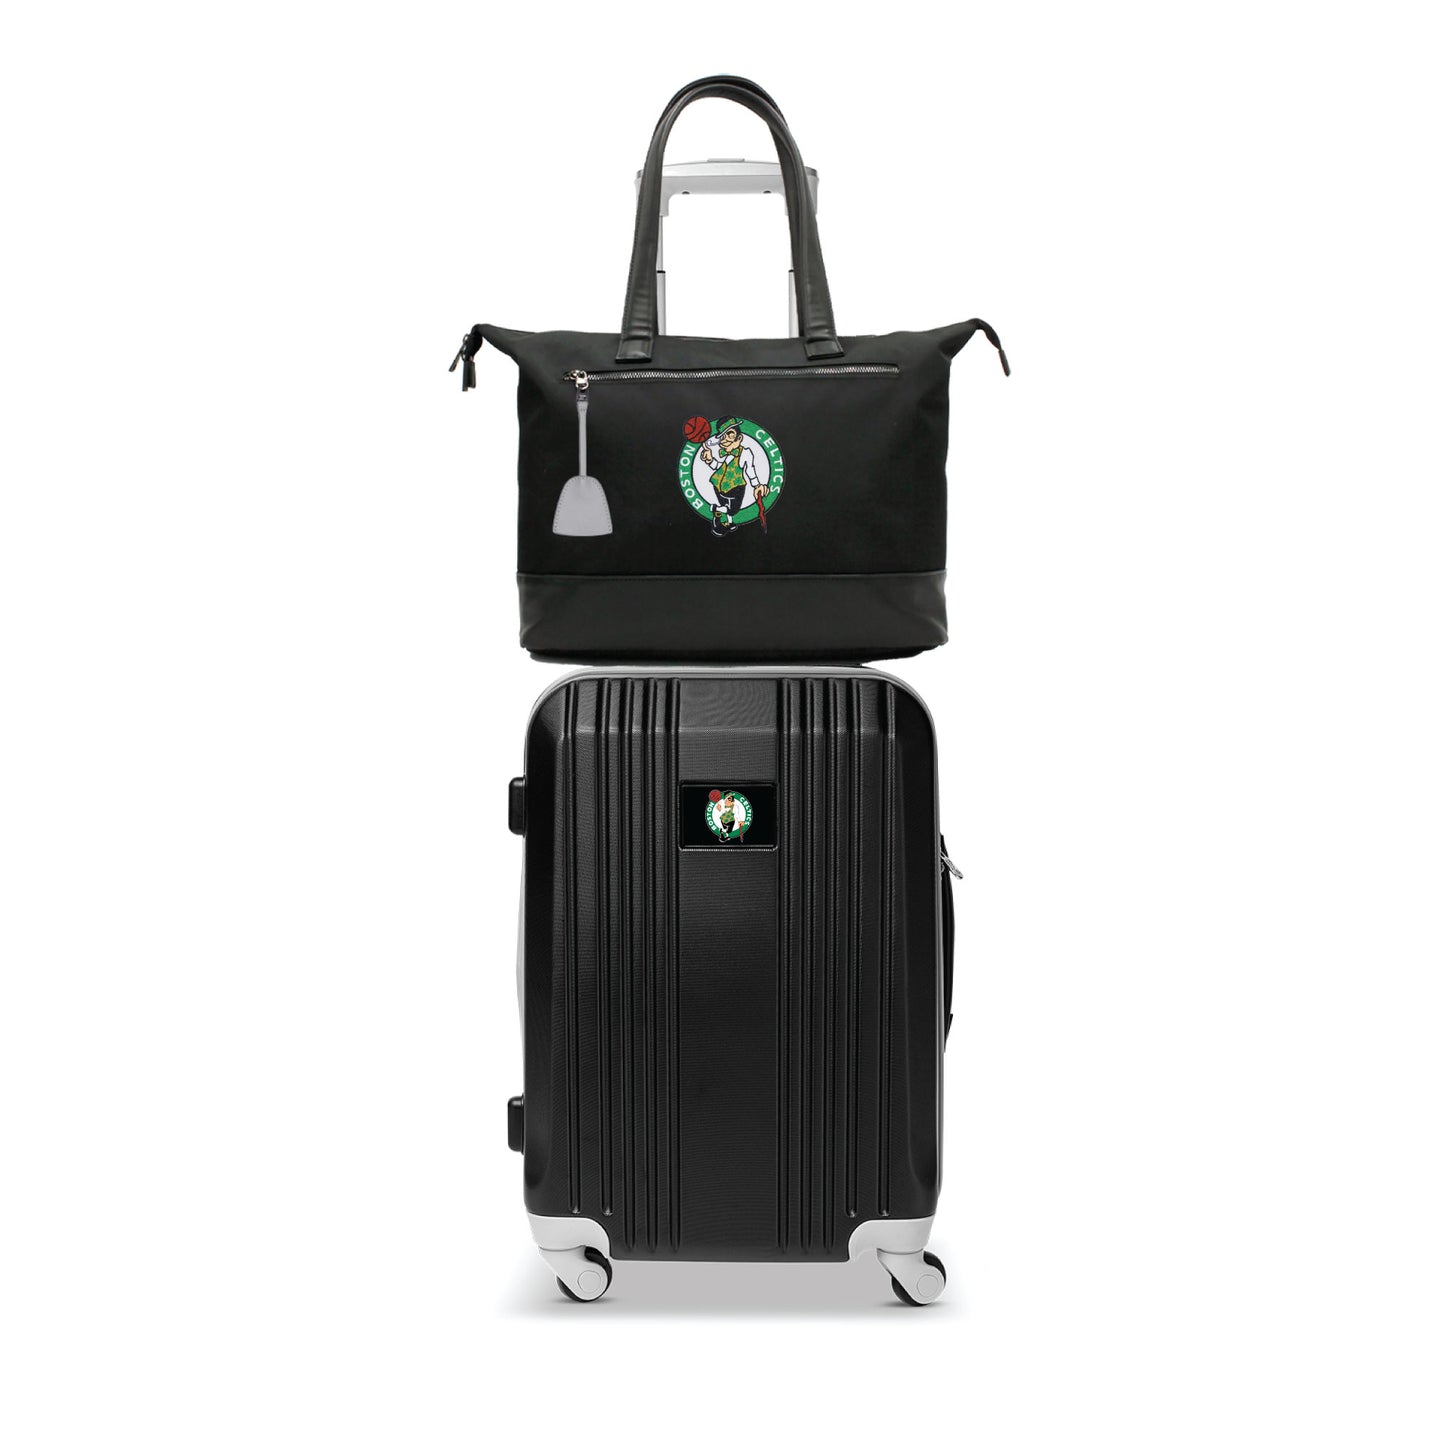 Boston Celtics Premium Laptop Tote Bag and Luggage Set